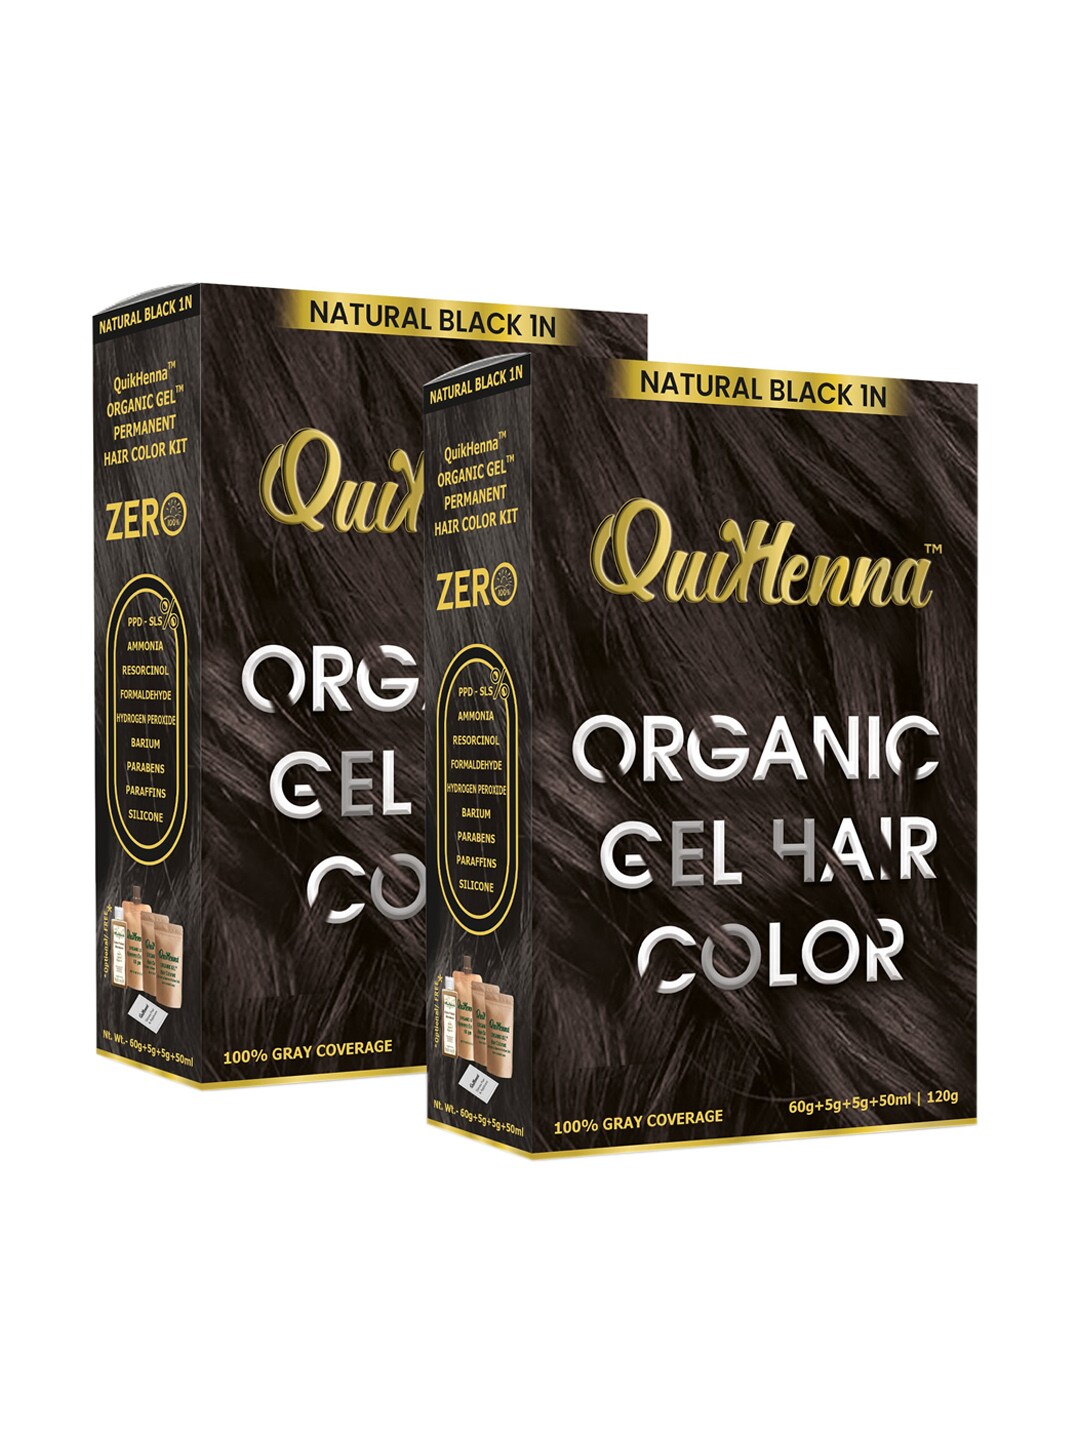 QUIKHENNA Set Of 2 Damage Free Organic Gel Hair Color - Natural Black 1N - 120 g Each Price in India